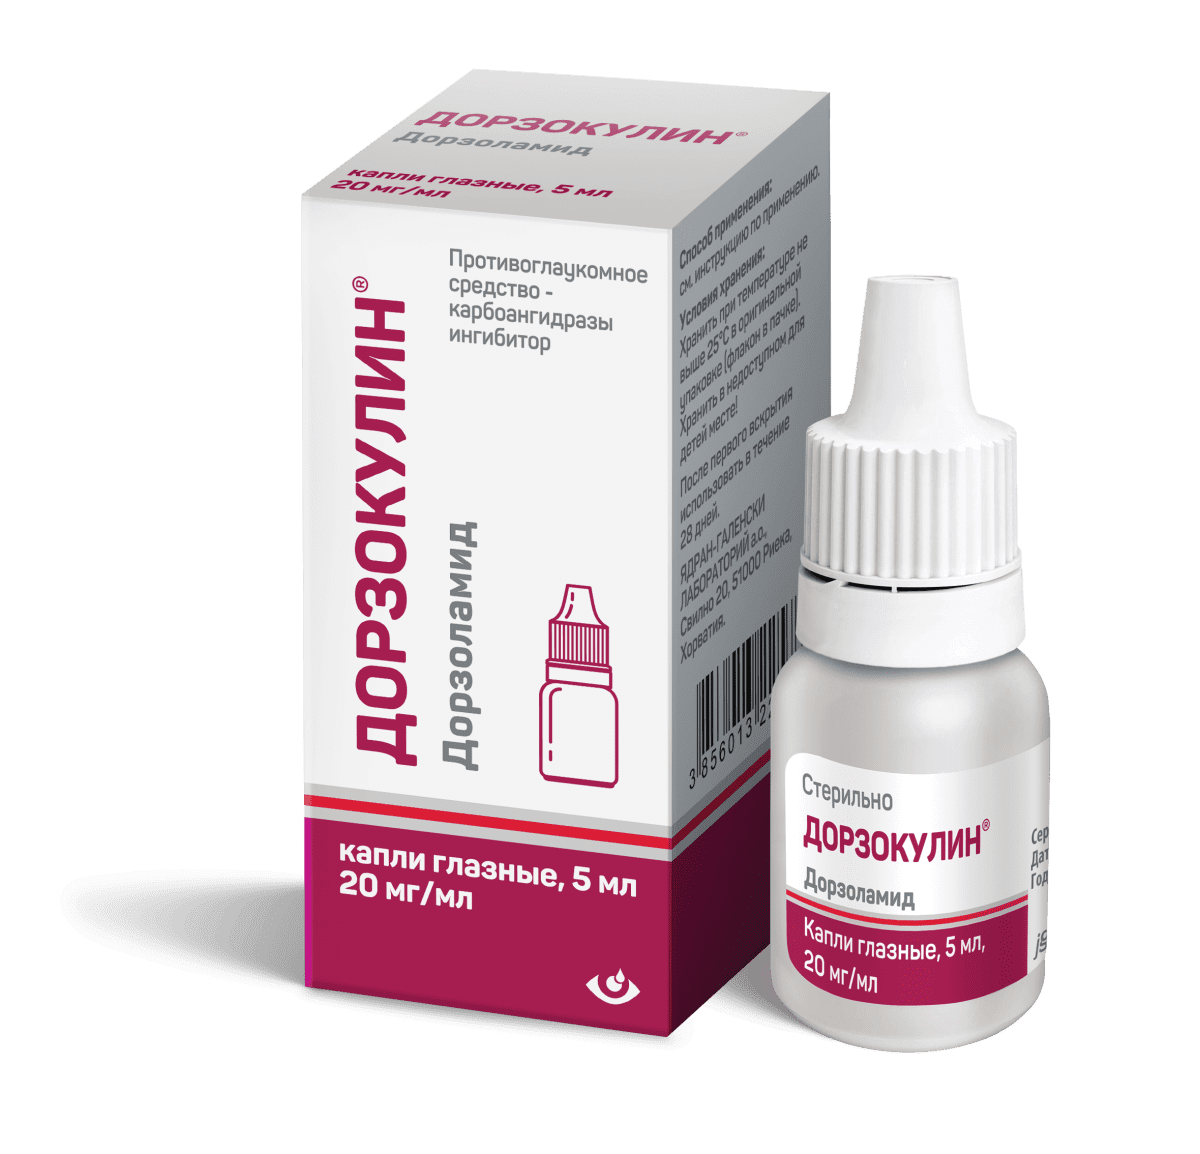 Дорзокулин® - JGL